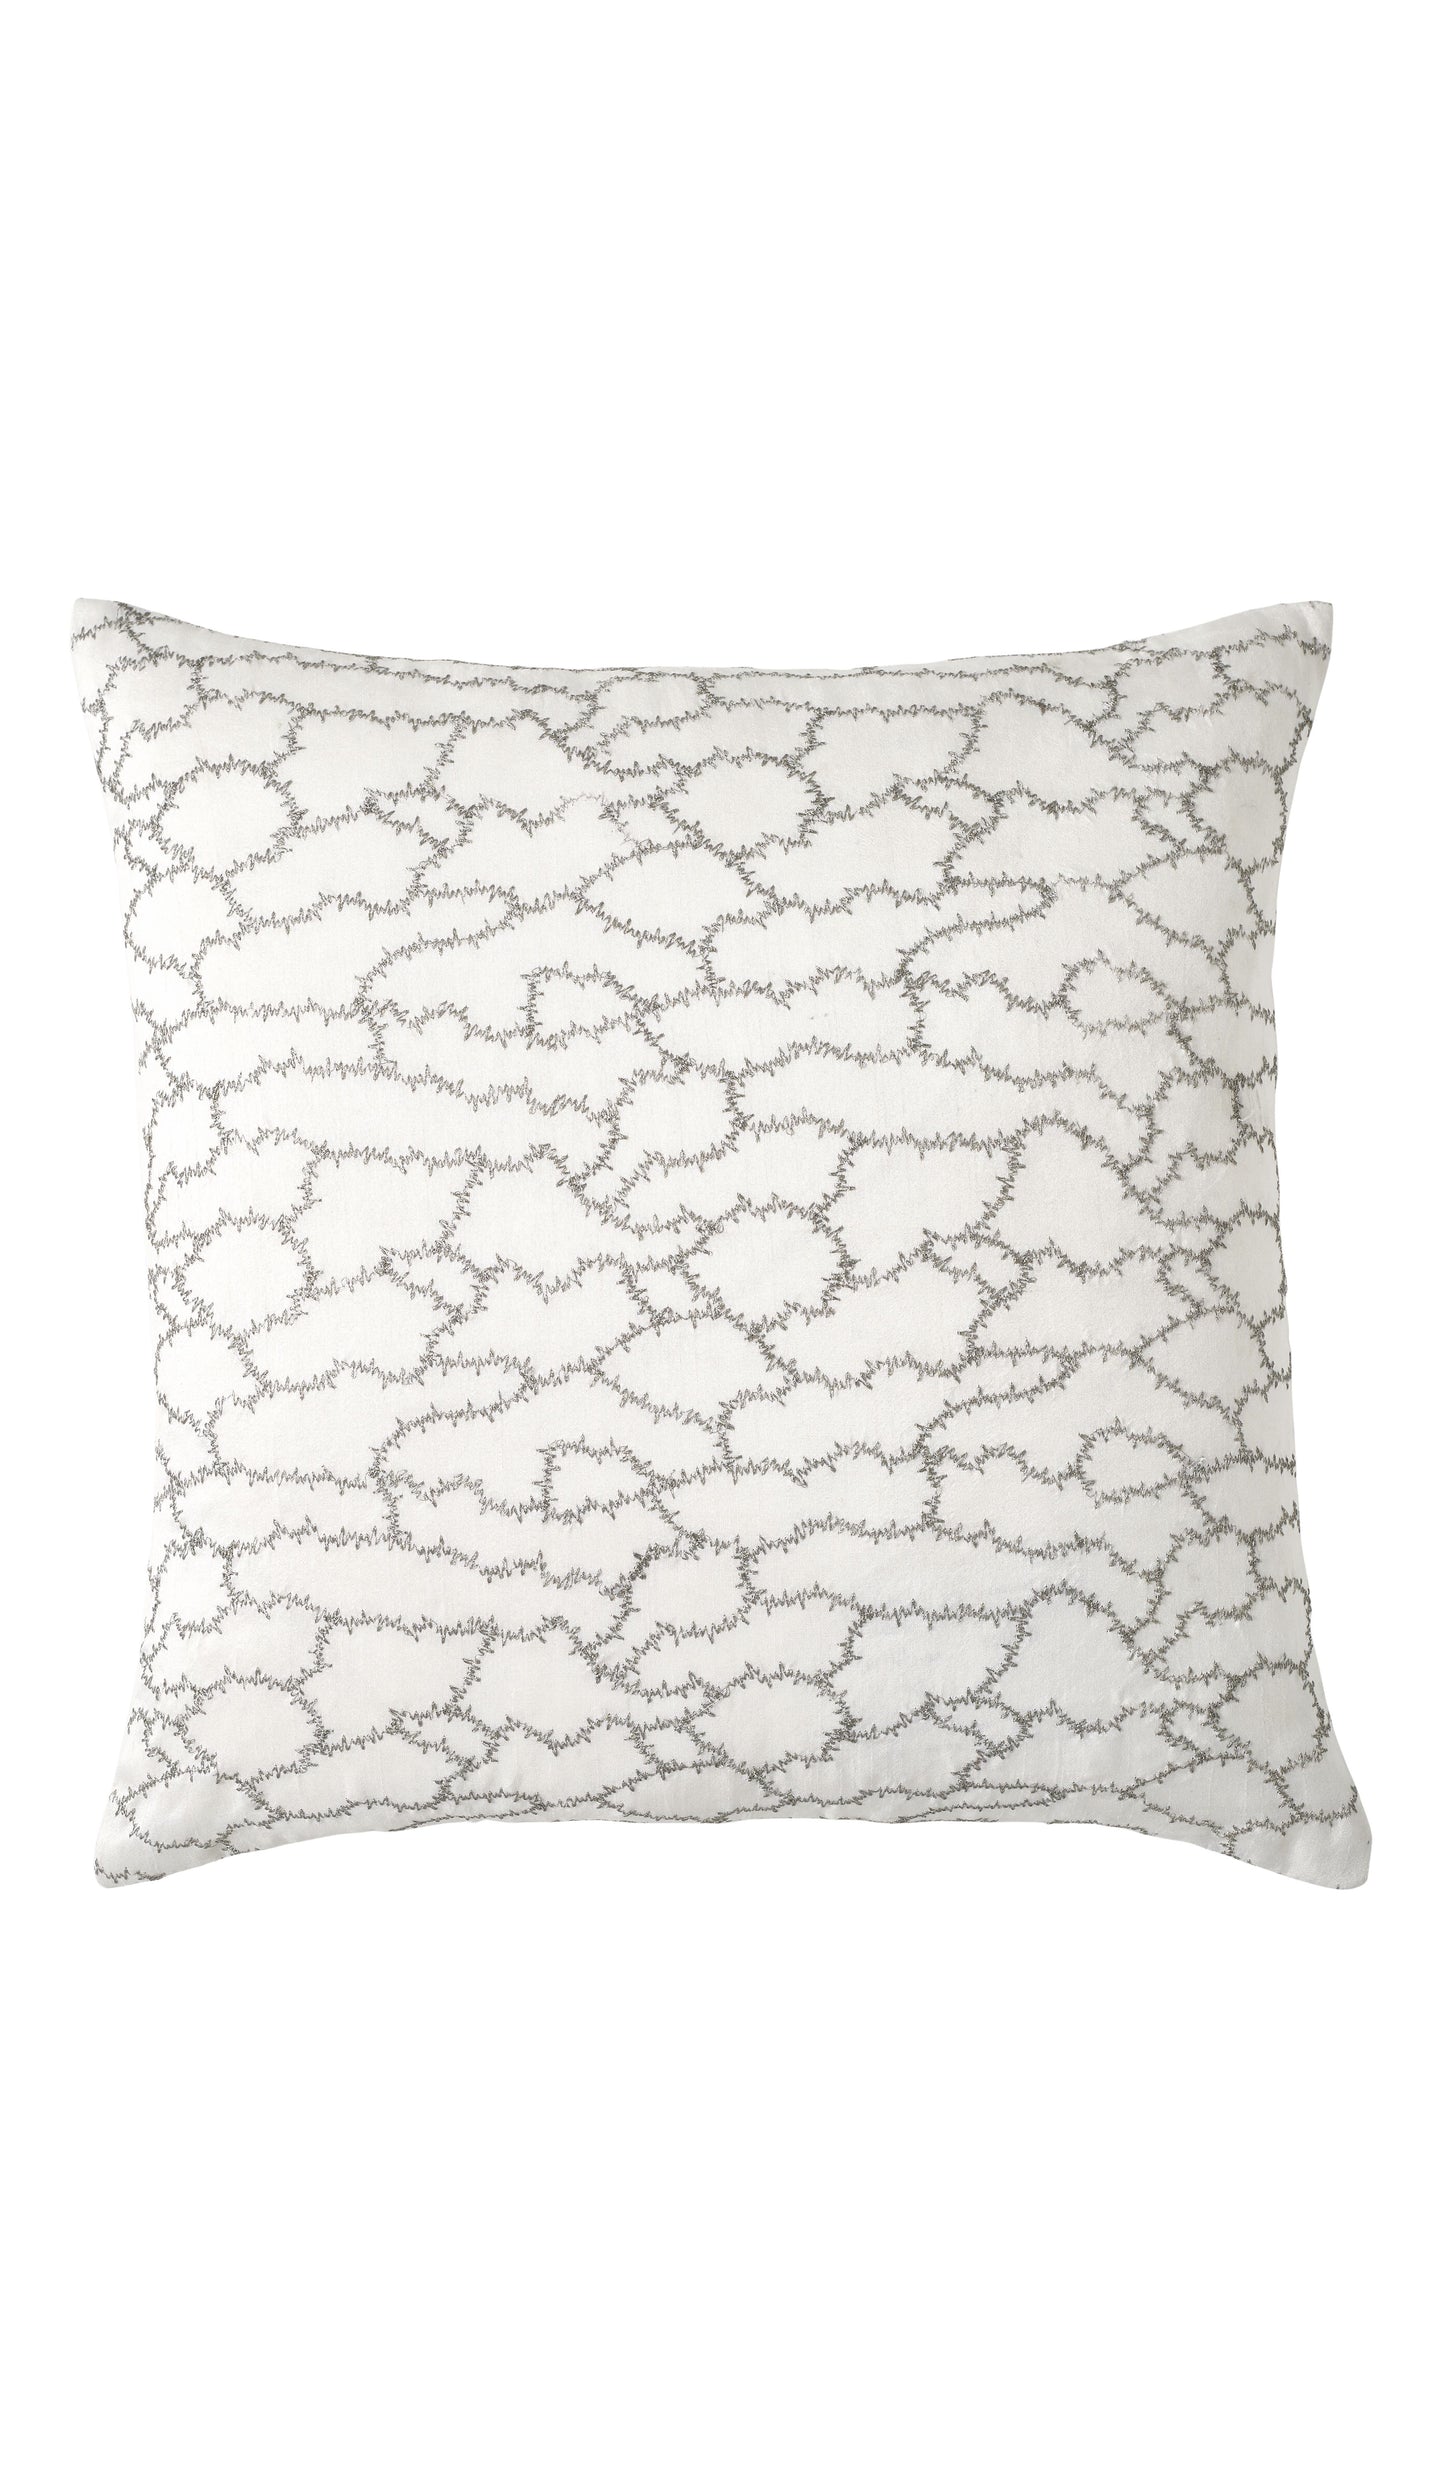 ALL SALES FINAL Michael Aram All Over Texture Decorative Pillow